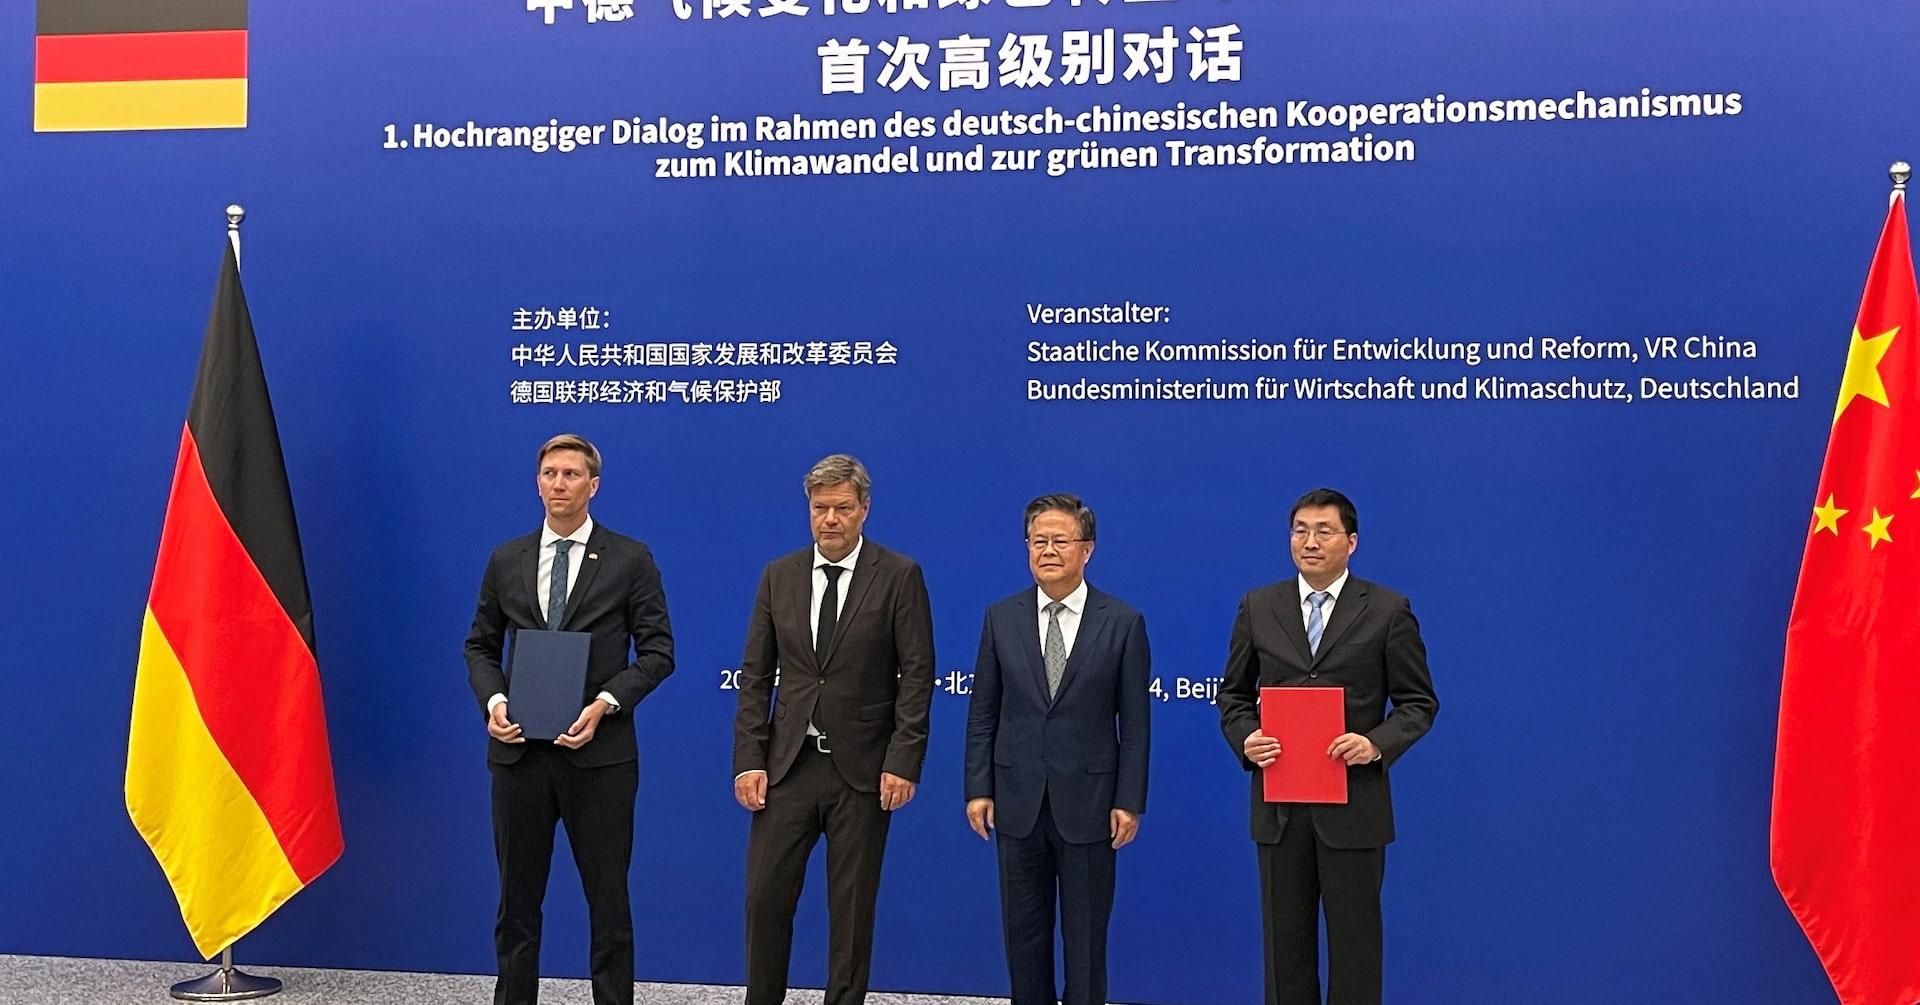 German economy minister says EU open for talks on China tariffs